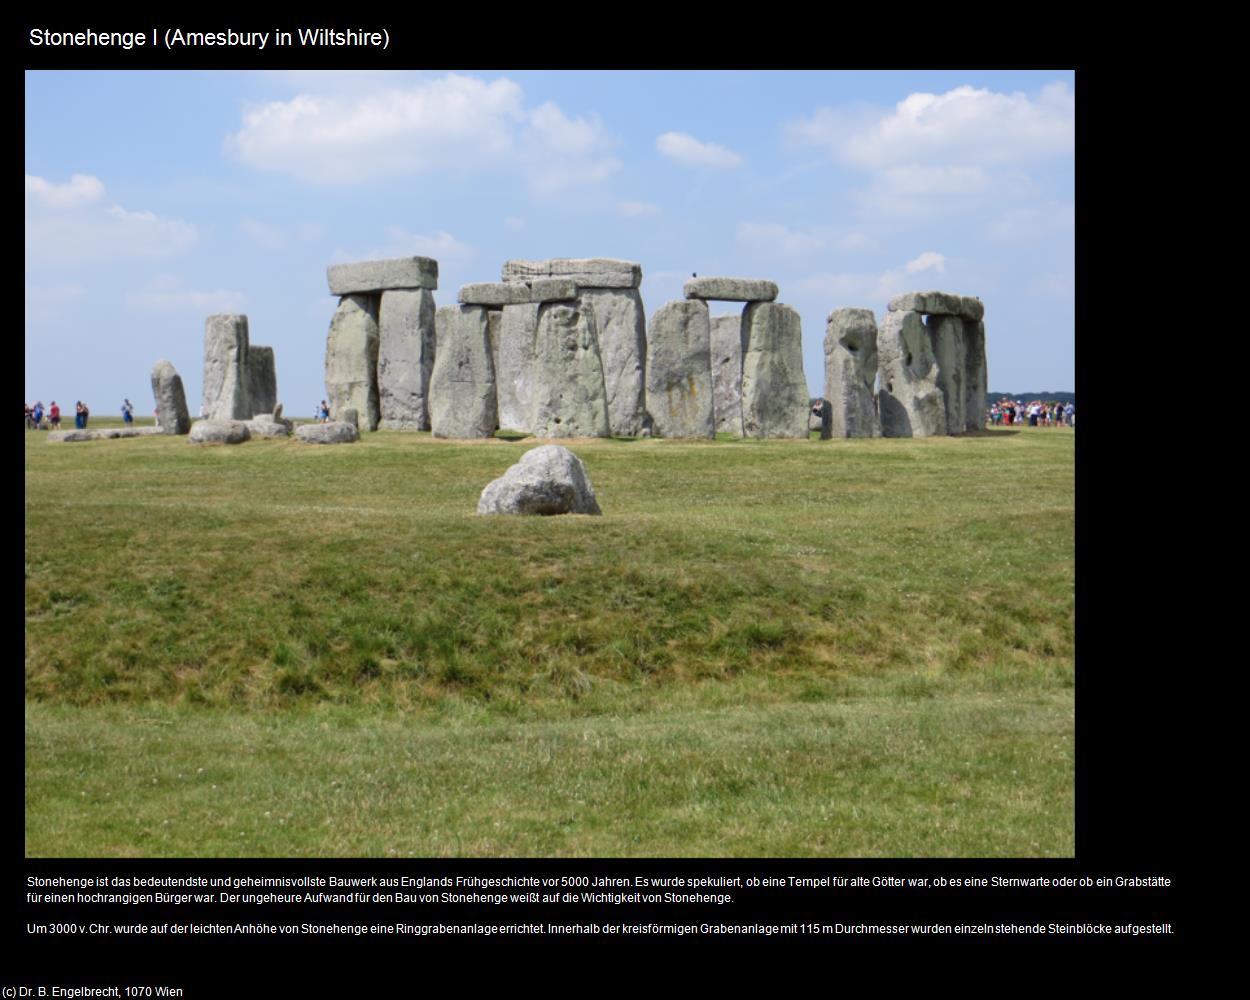 Stonehenge I  (Amesbury in Wiltshire, England) in Kulturatlas-ENGLAND und WALES